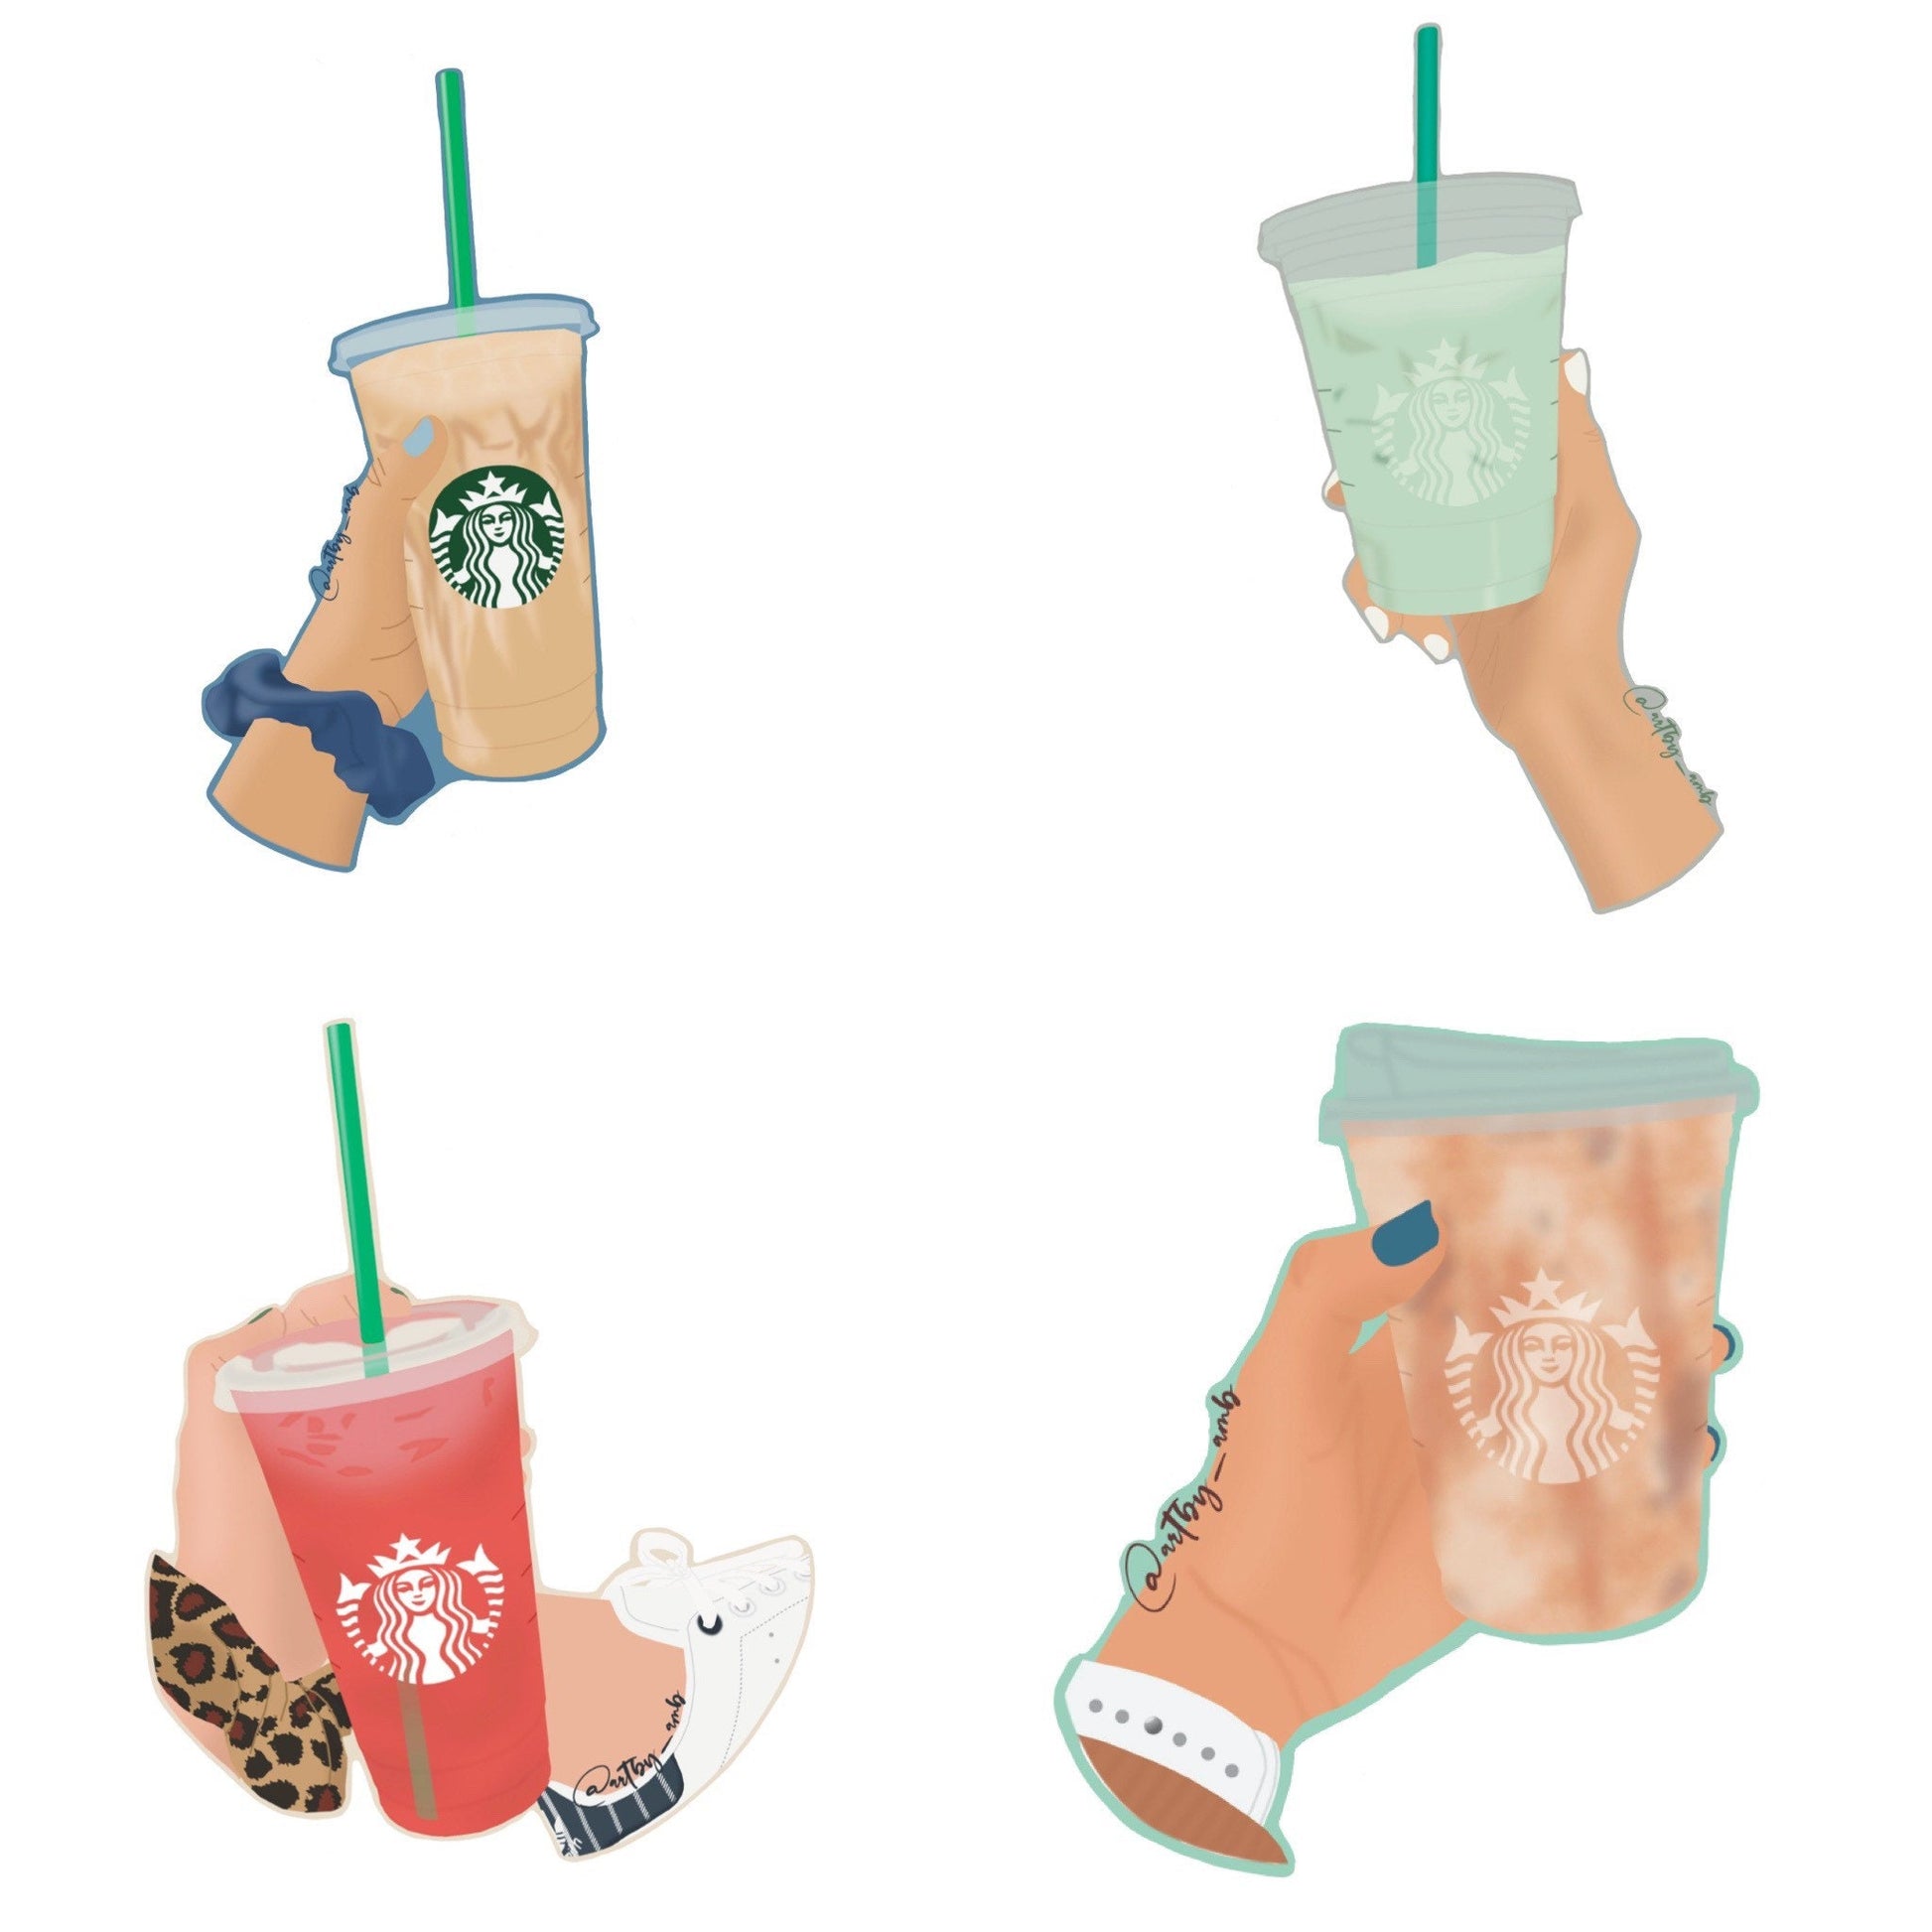 Starbucks Coffee Decal / Sticker 01